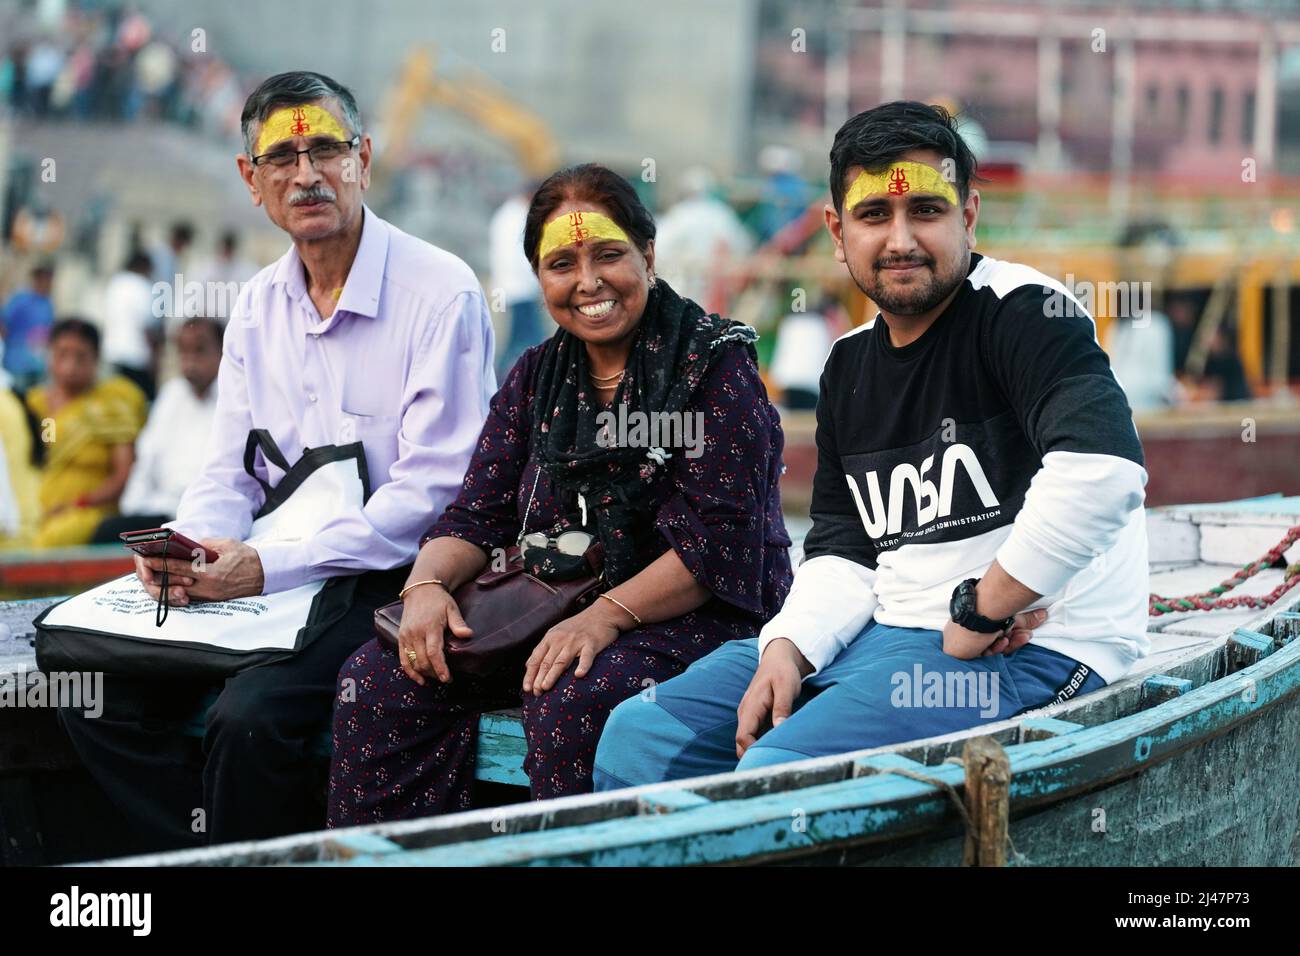 Ghats, Boote und den Fluss Ganges, Varanasi, Uttar Pradesh, Indien Stockfoto